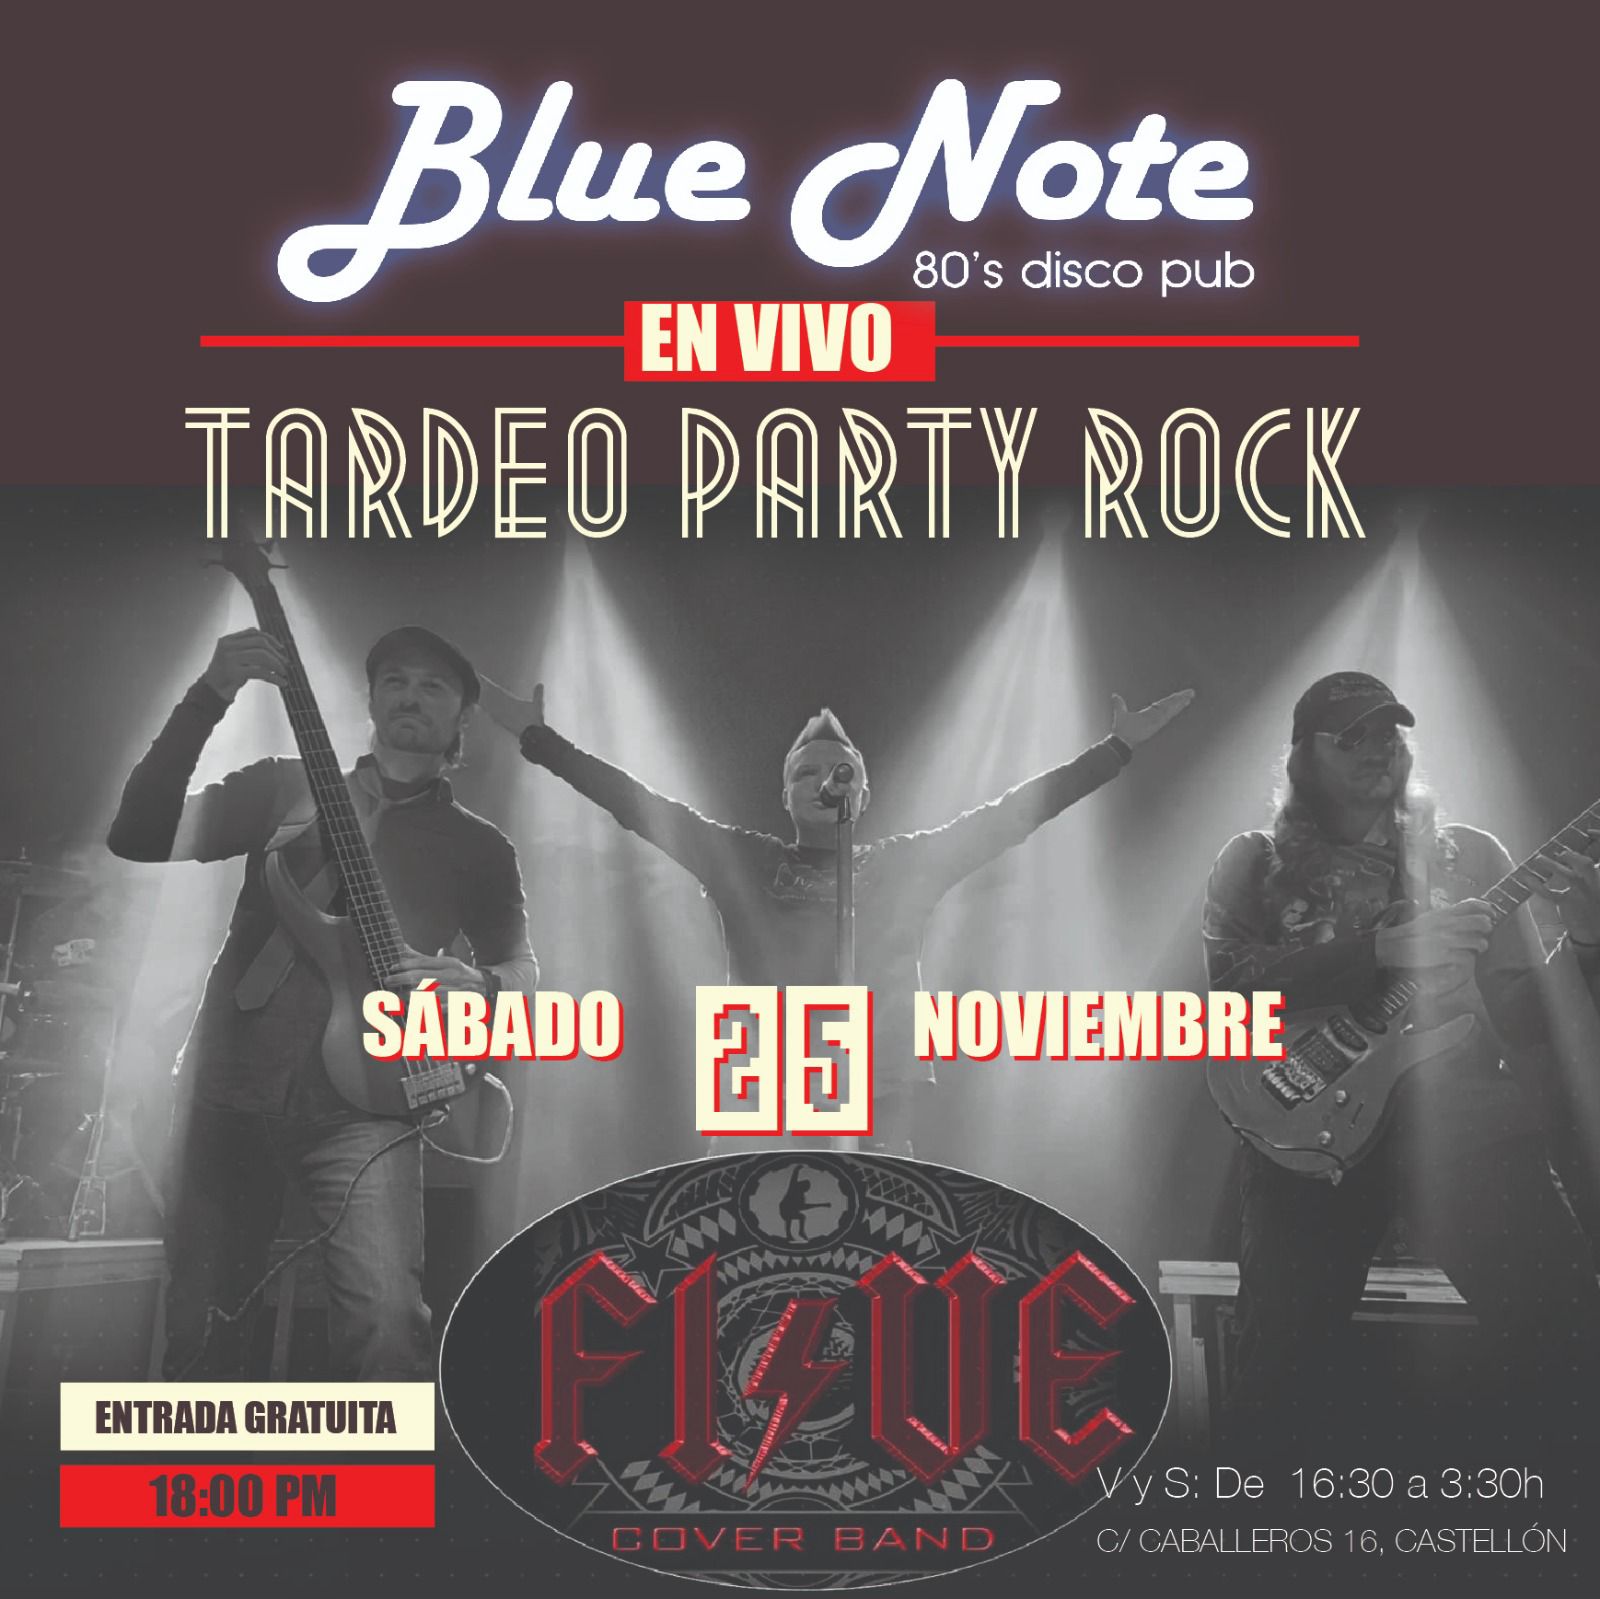 Tardeo Party Rock